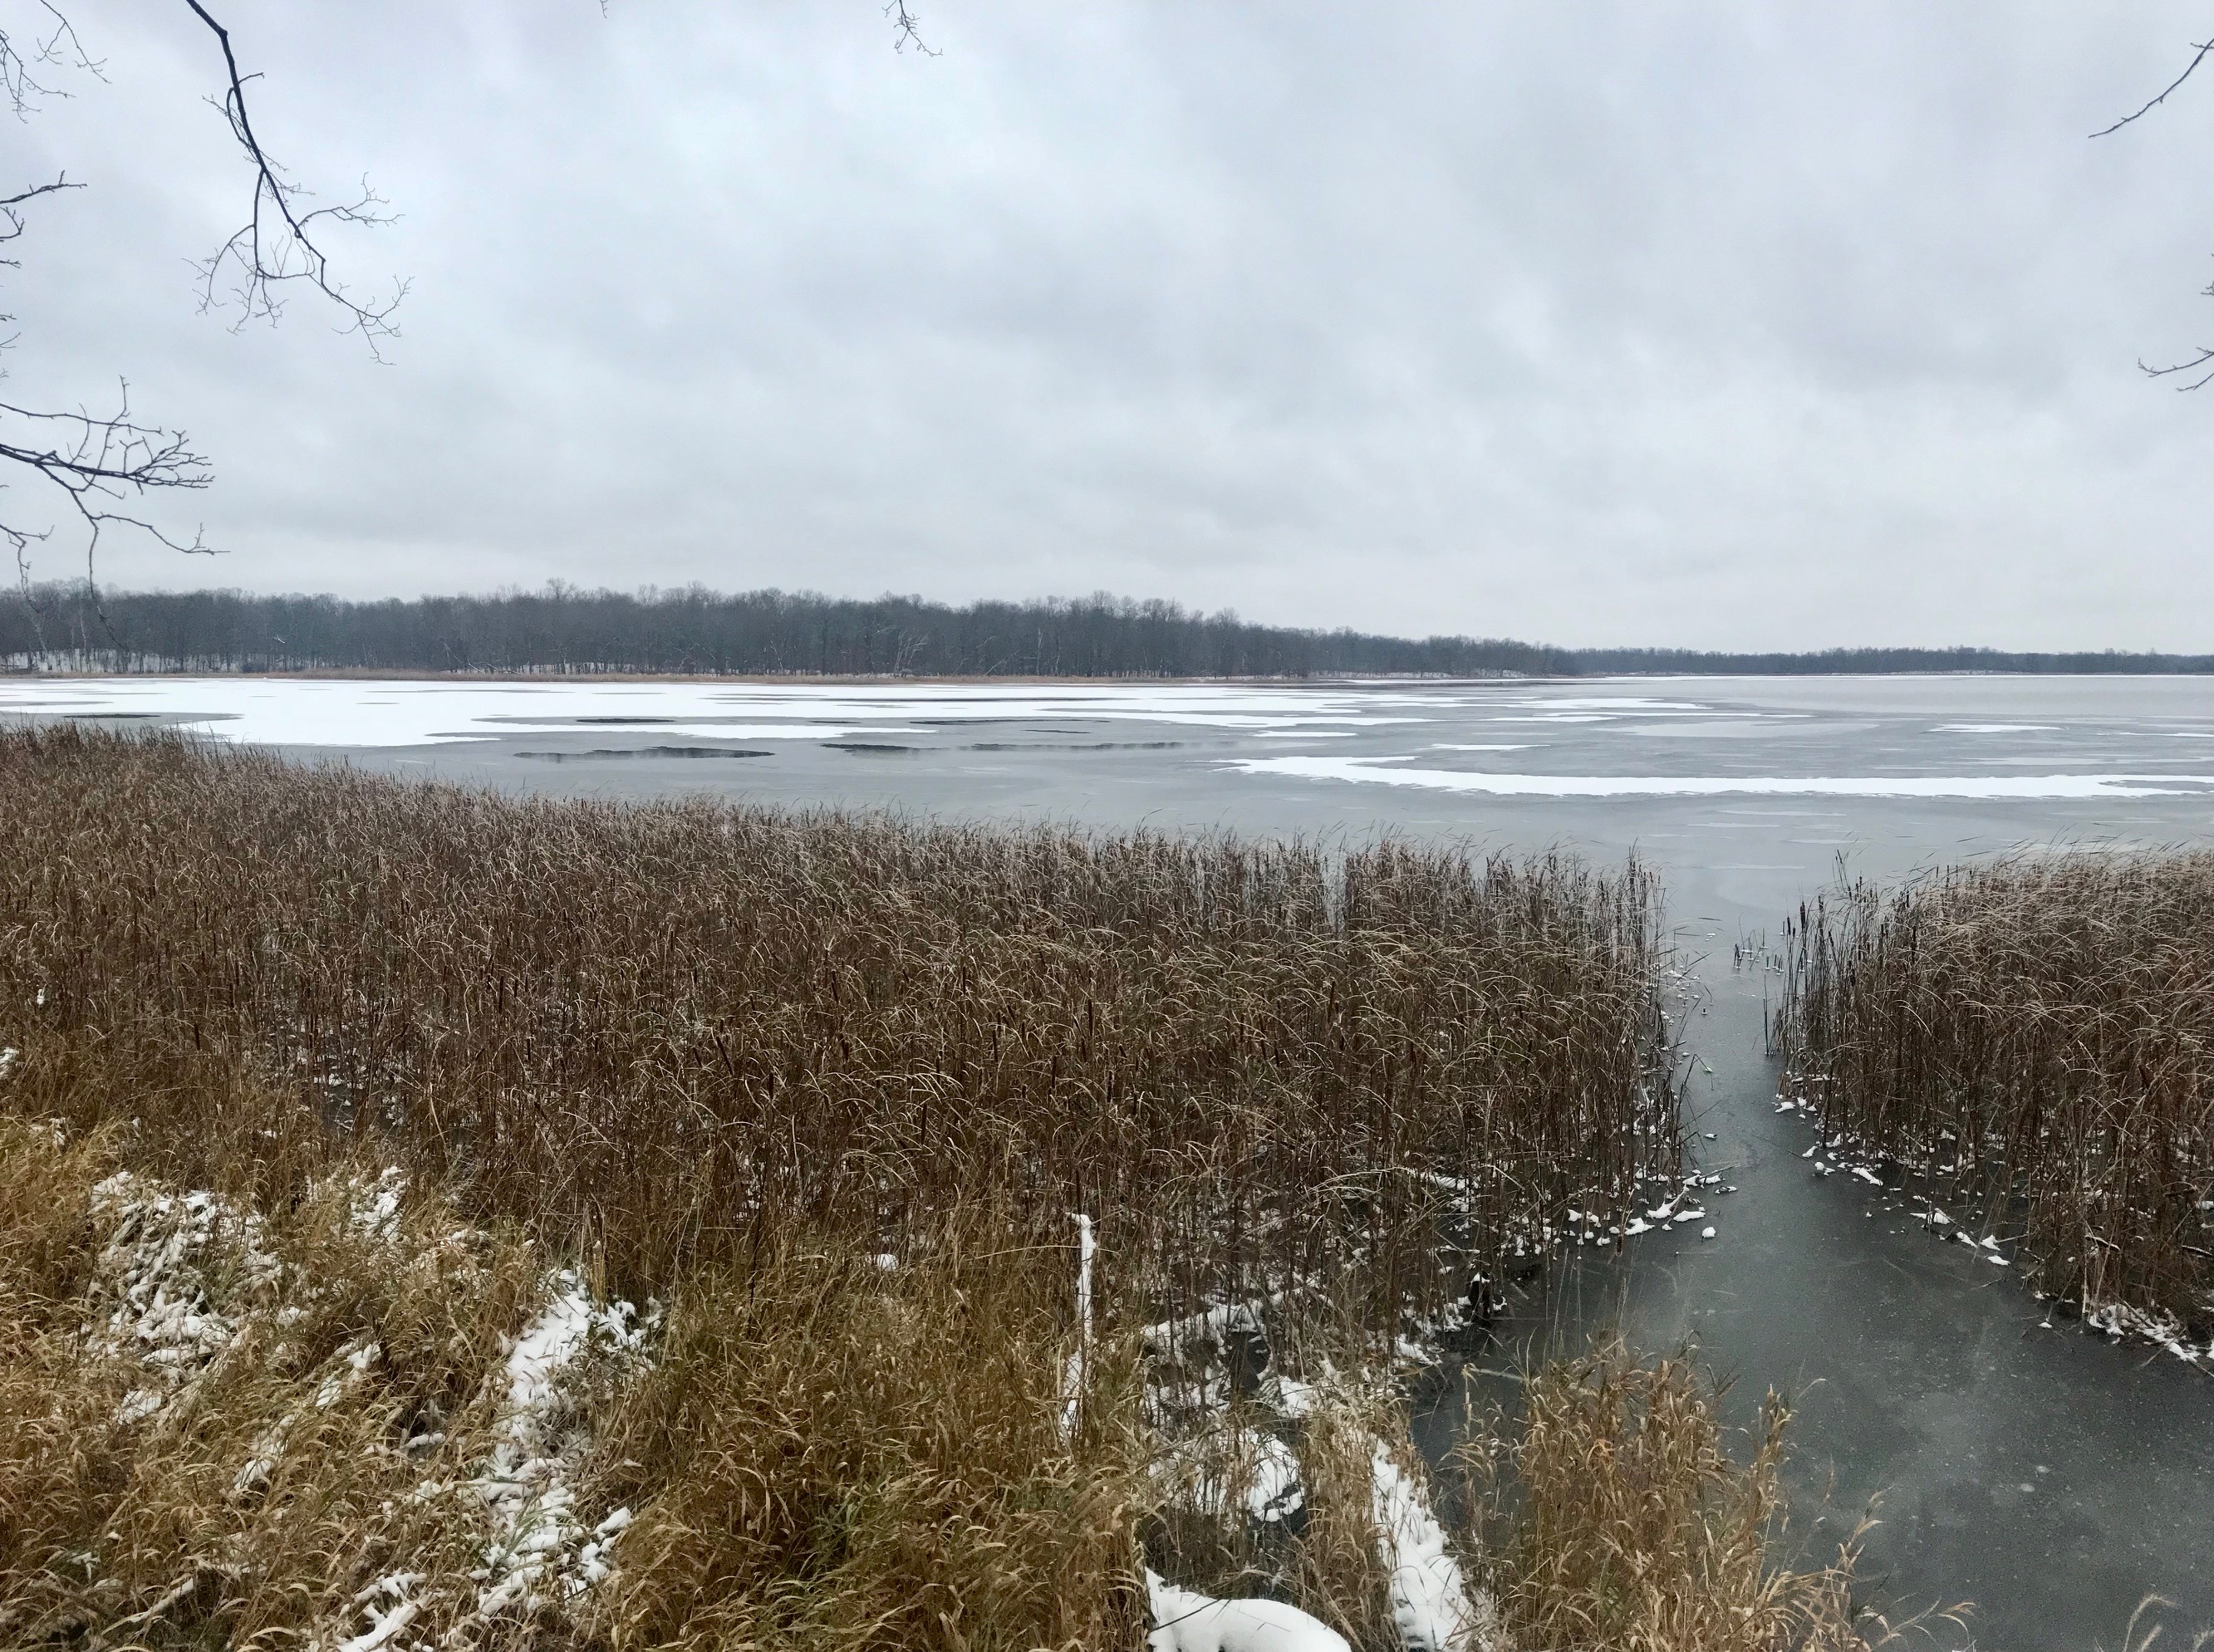 Island lake frozen over 75%, November 1st, 2017.